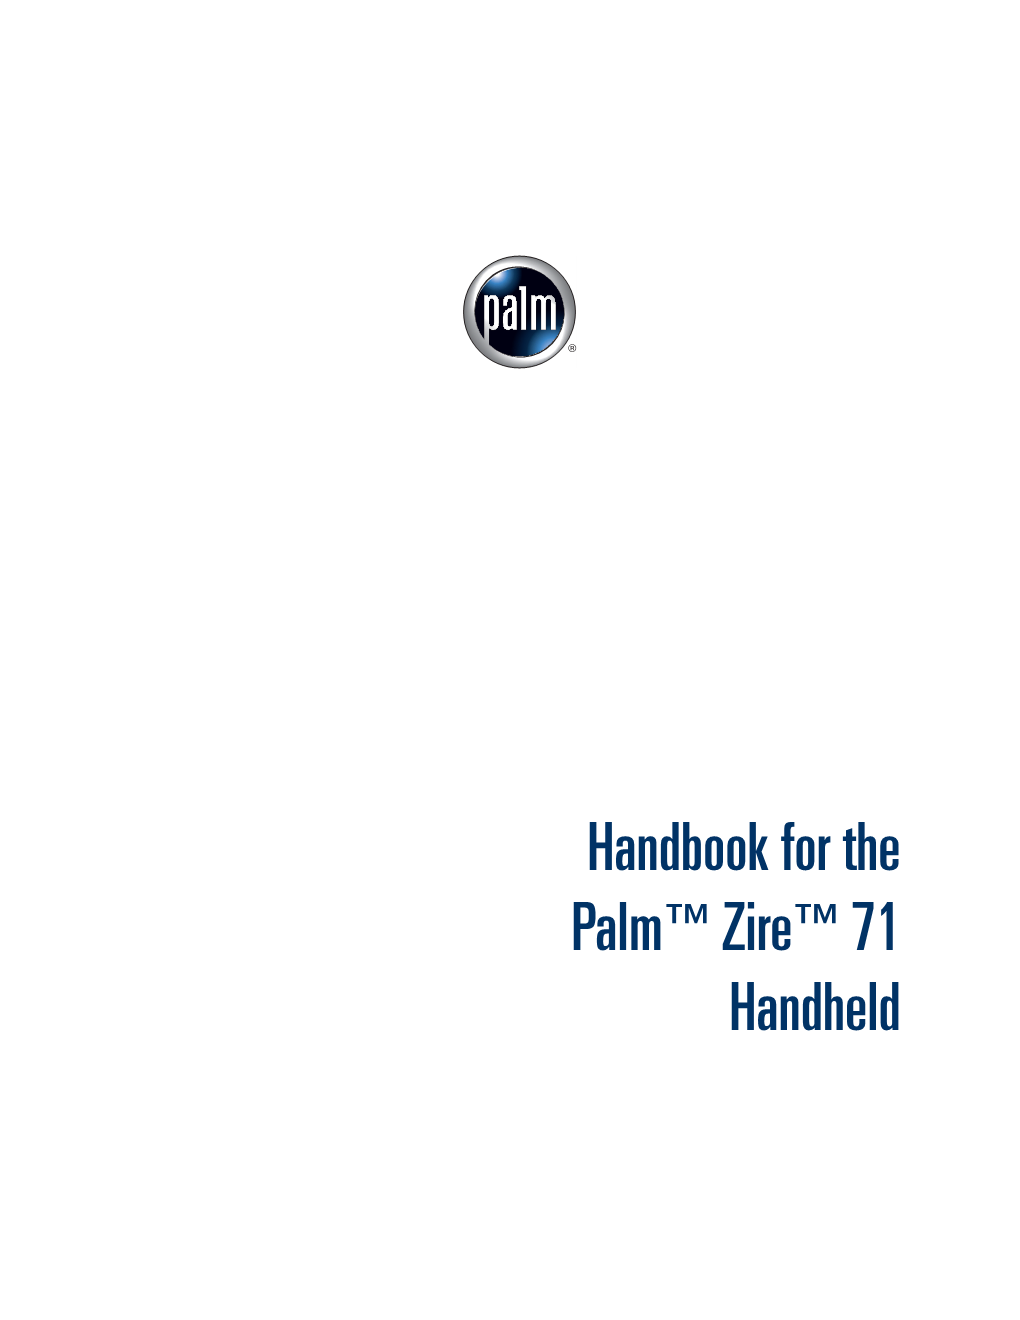 Handbook for the Palm Zire 71 Handheld